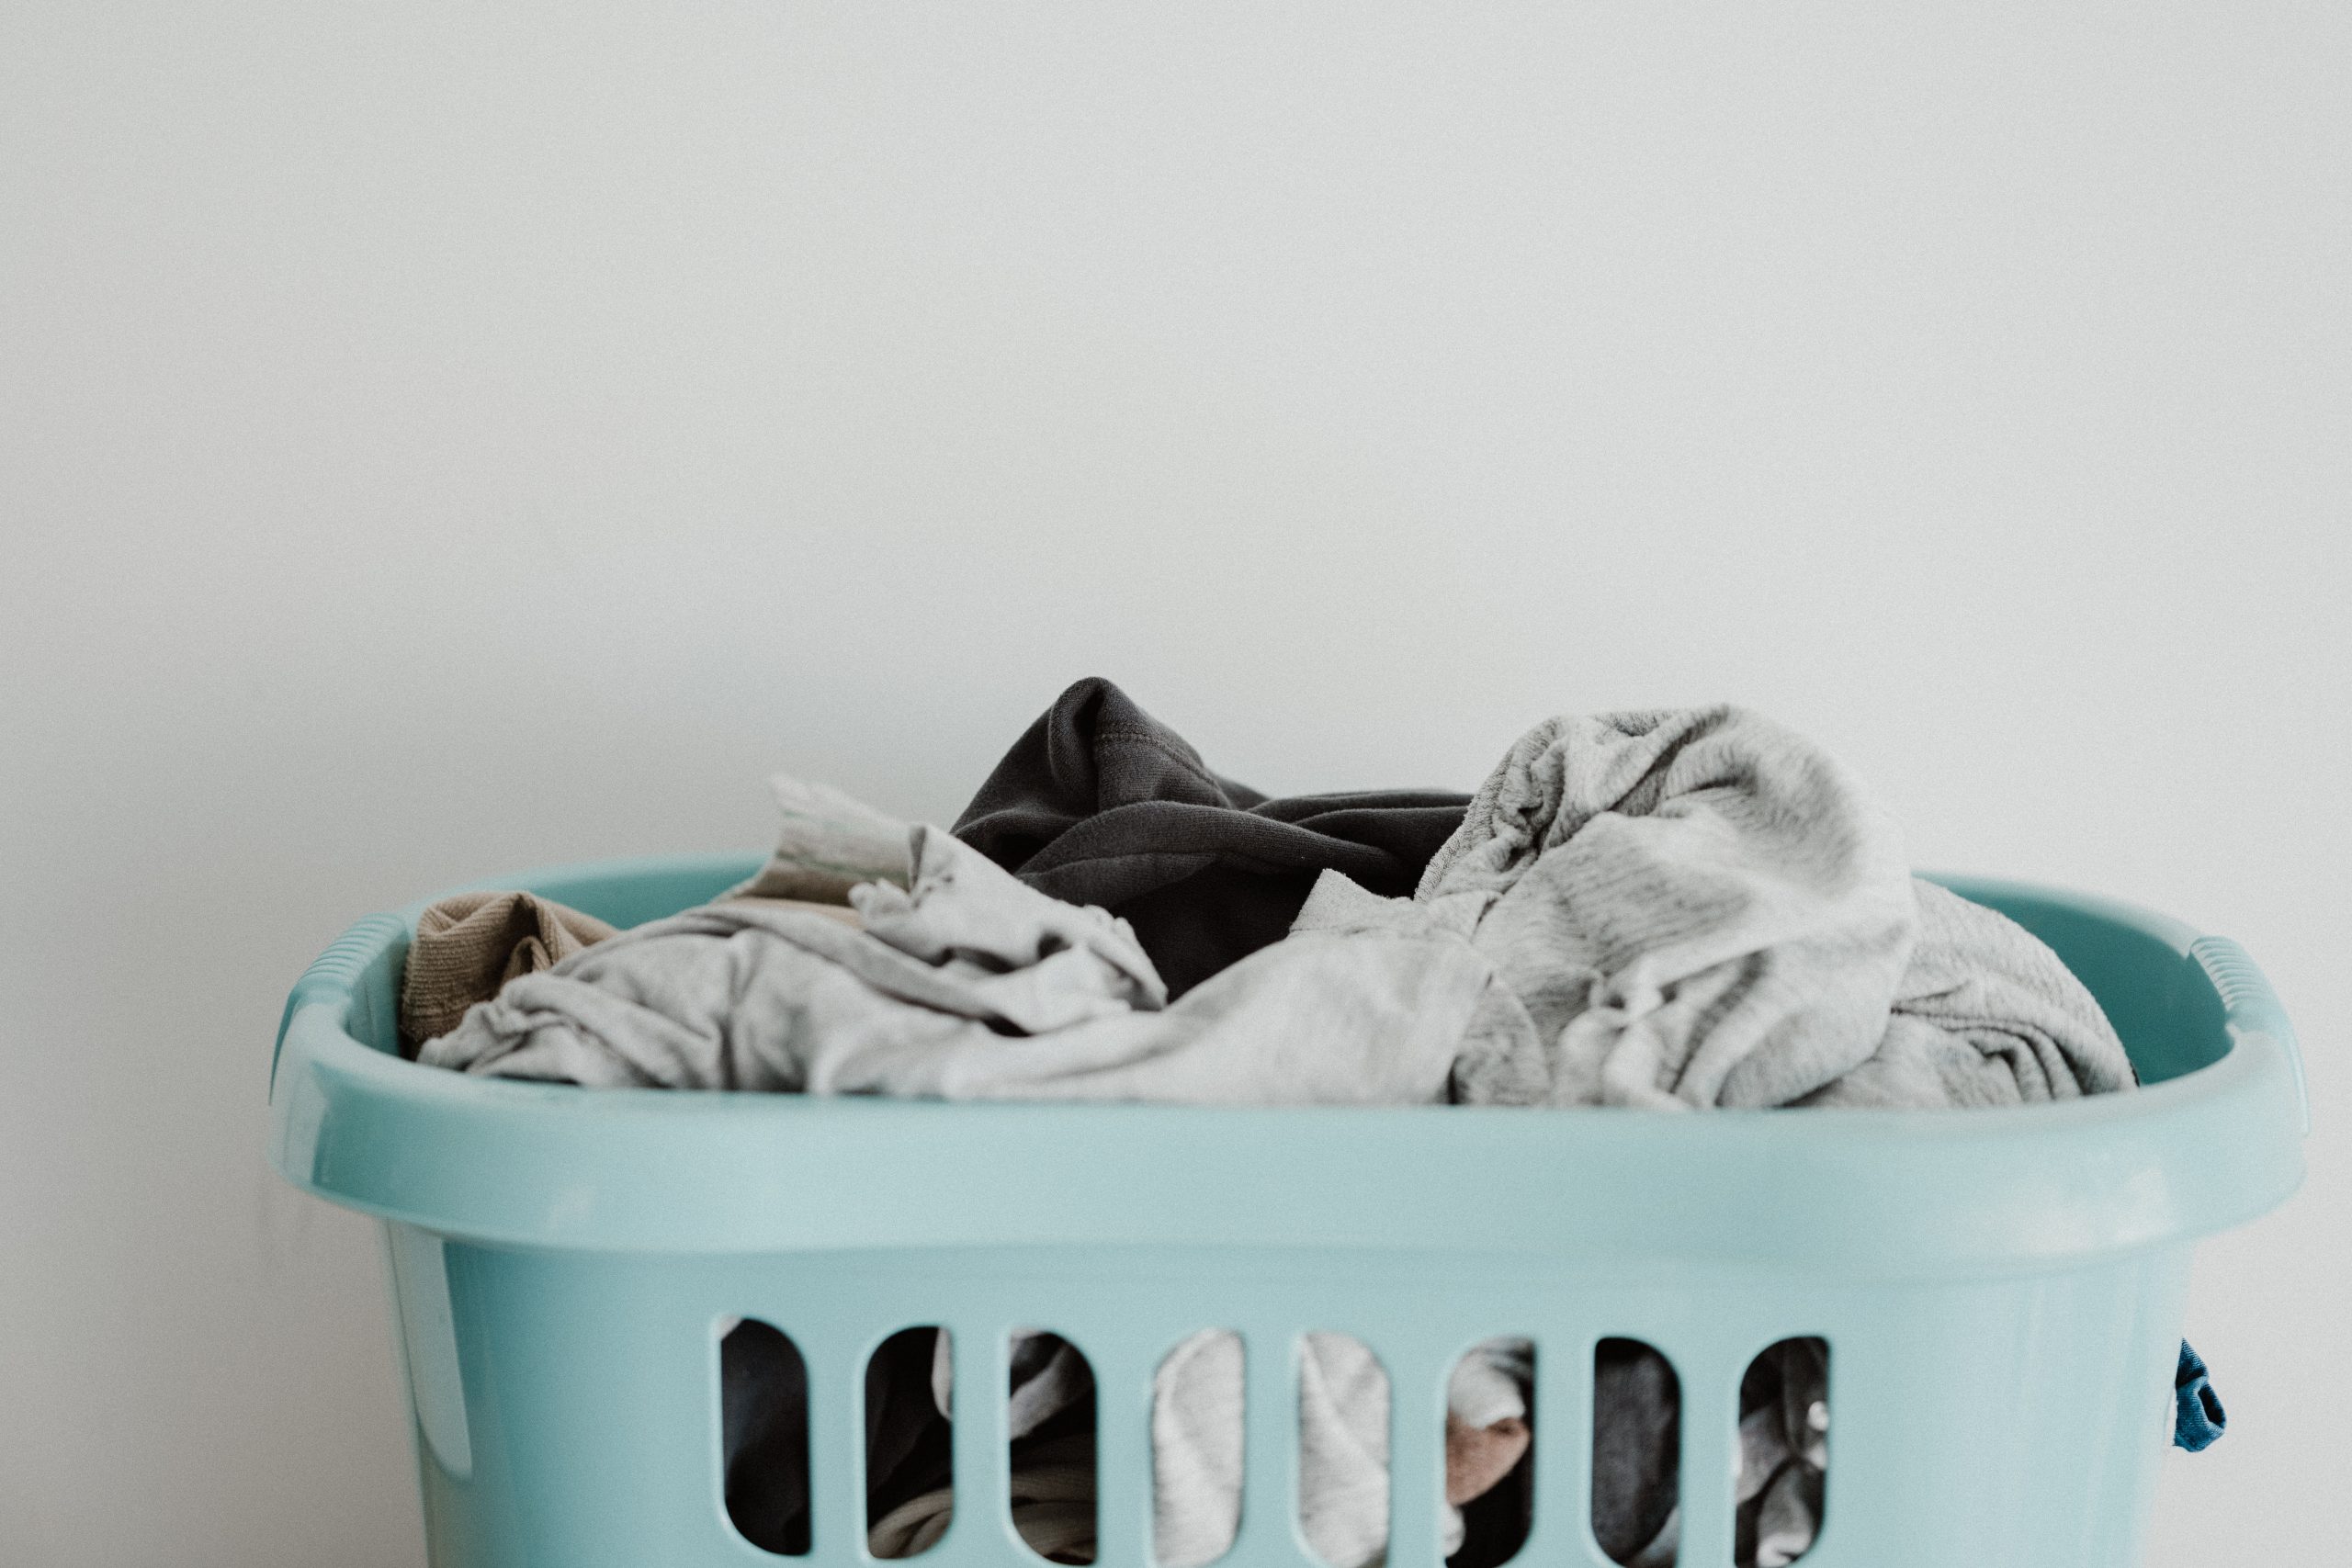 Laundry in light blue basket